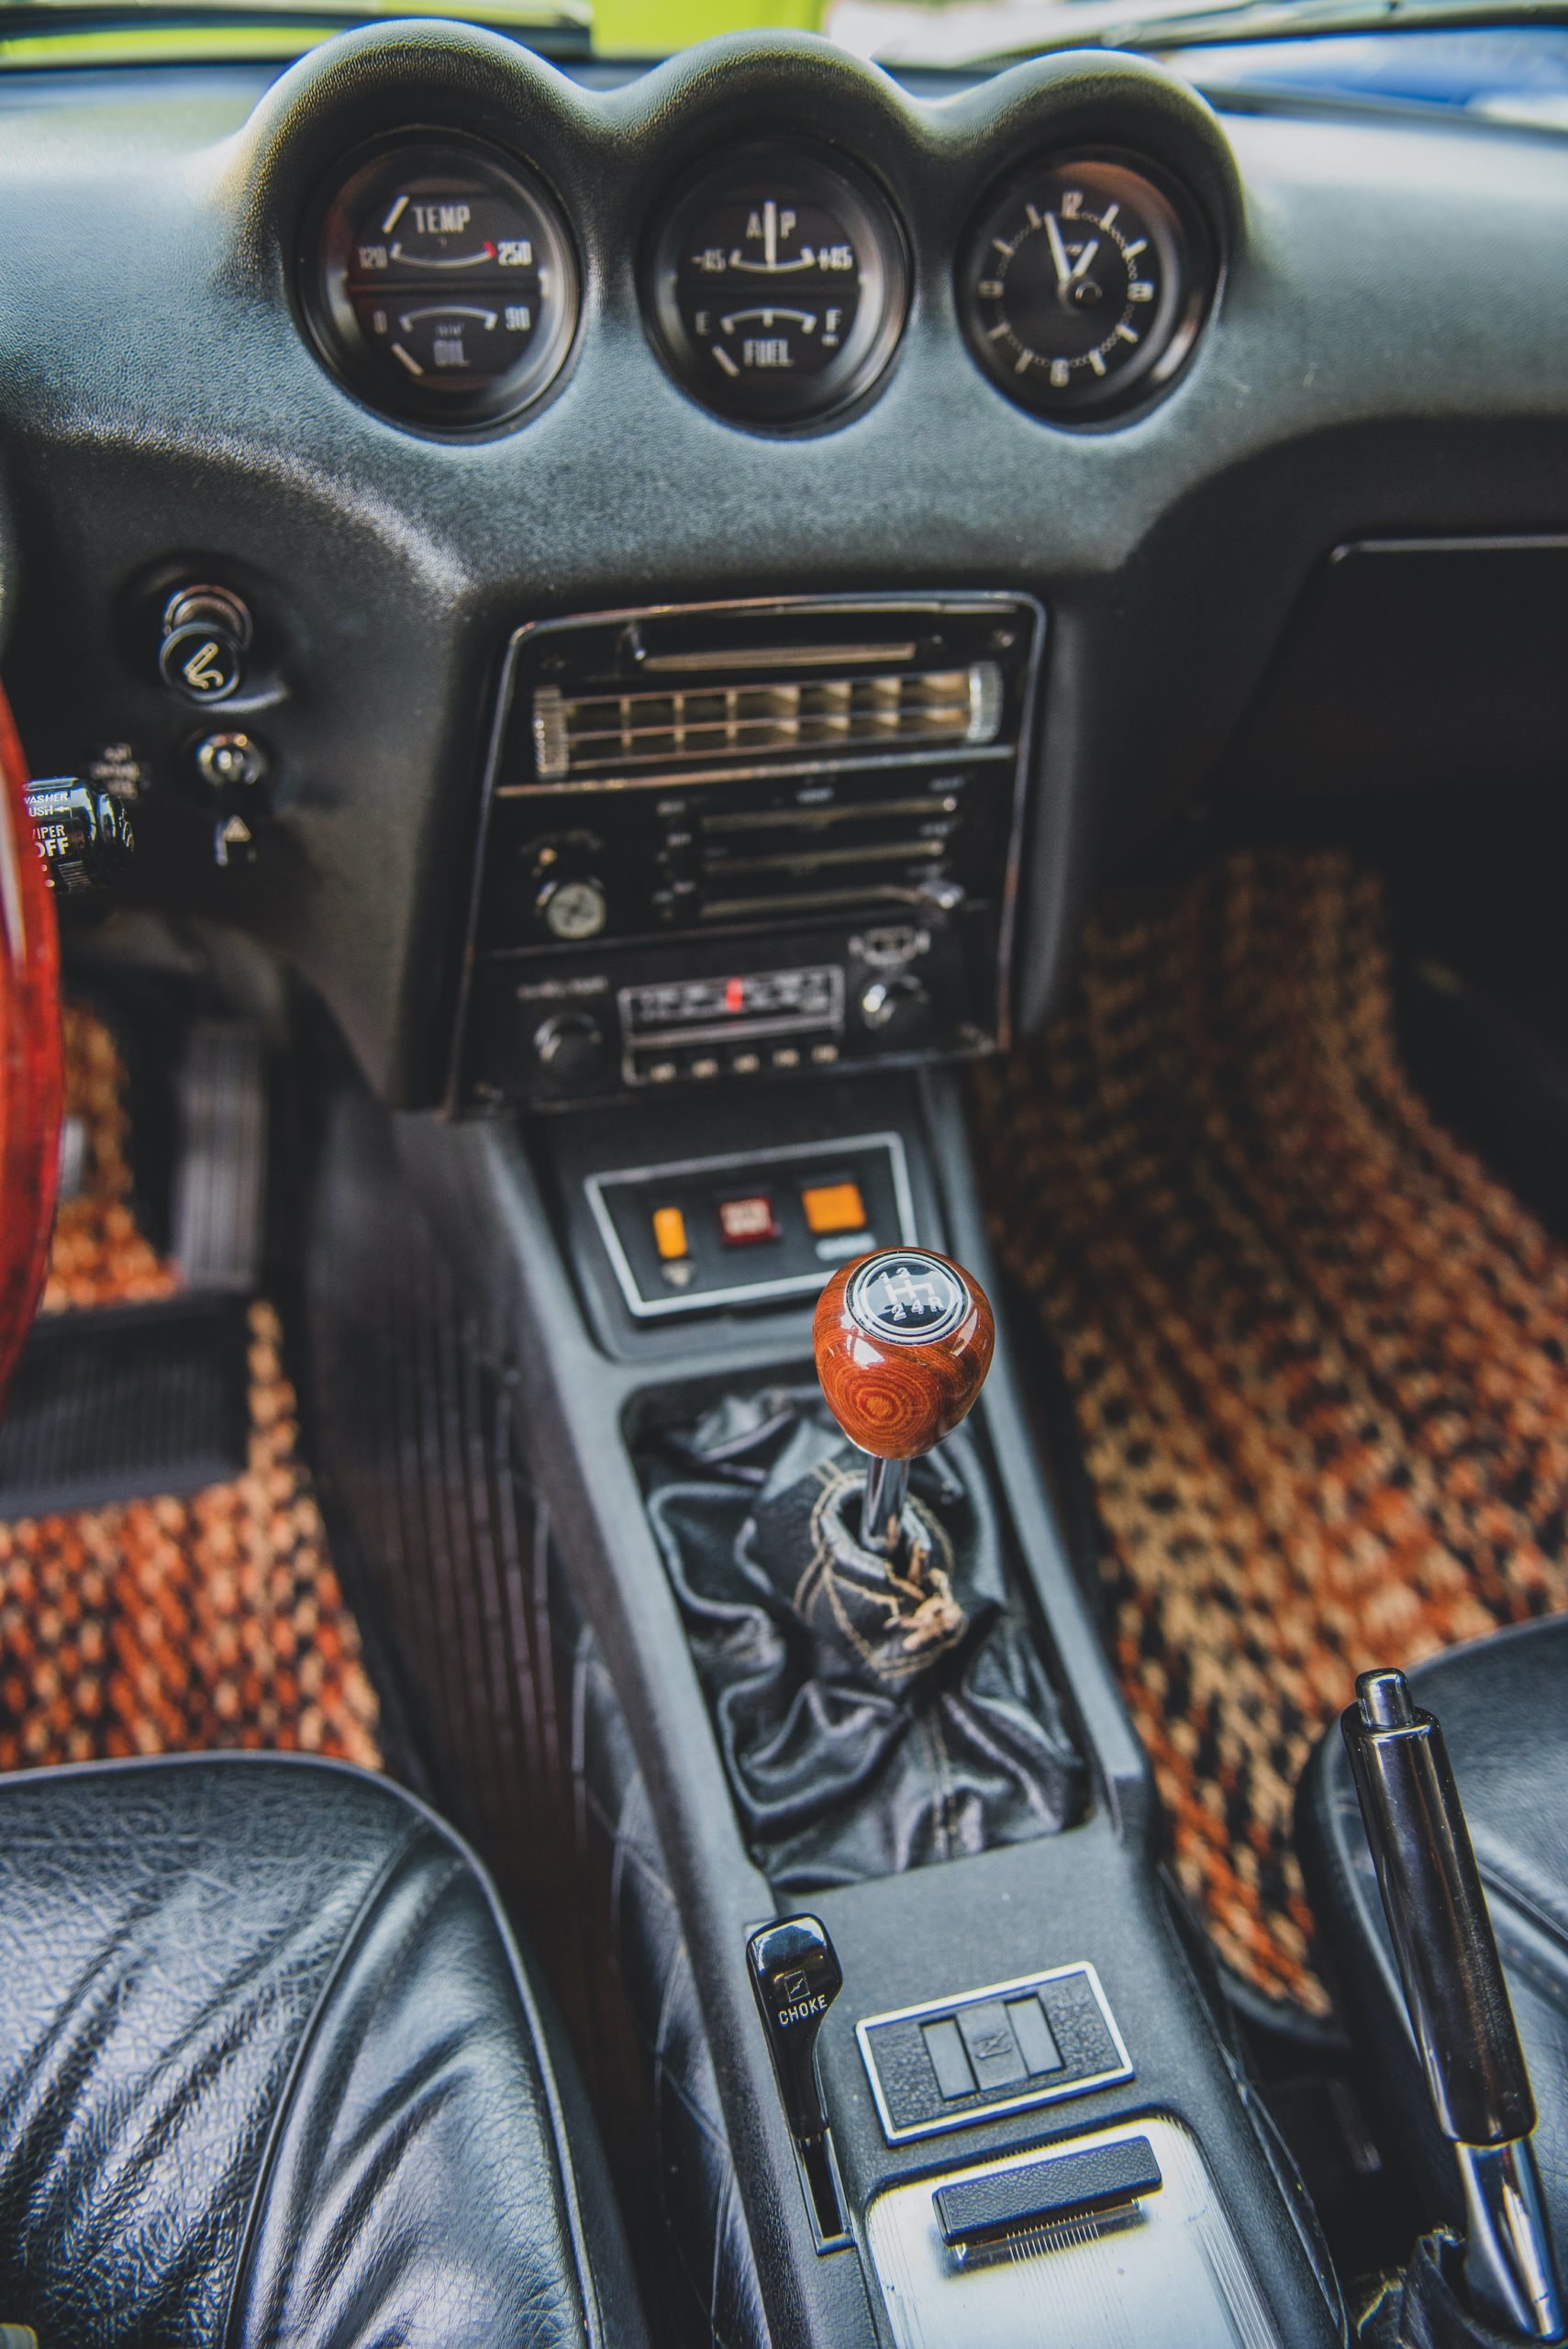 An Immaculately Restored Datsun 240Z – The Original Nissan Z Car